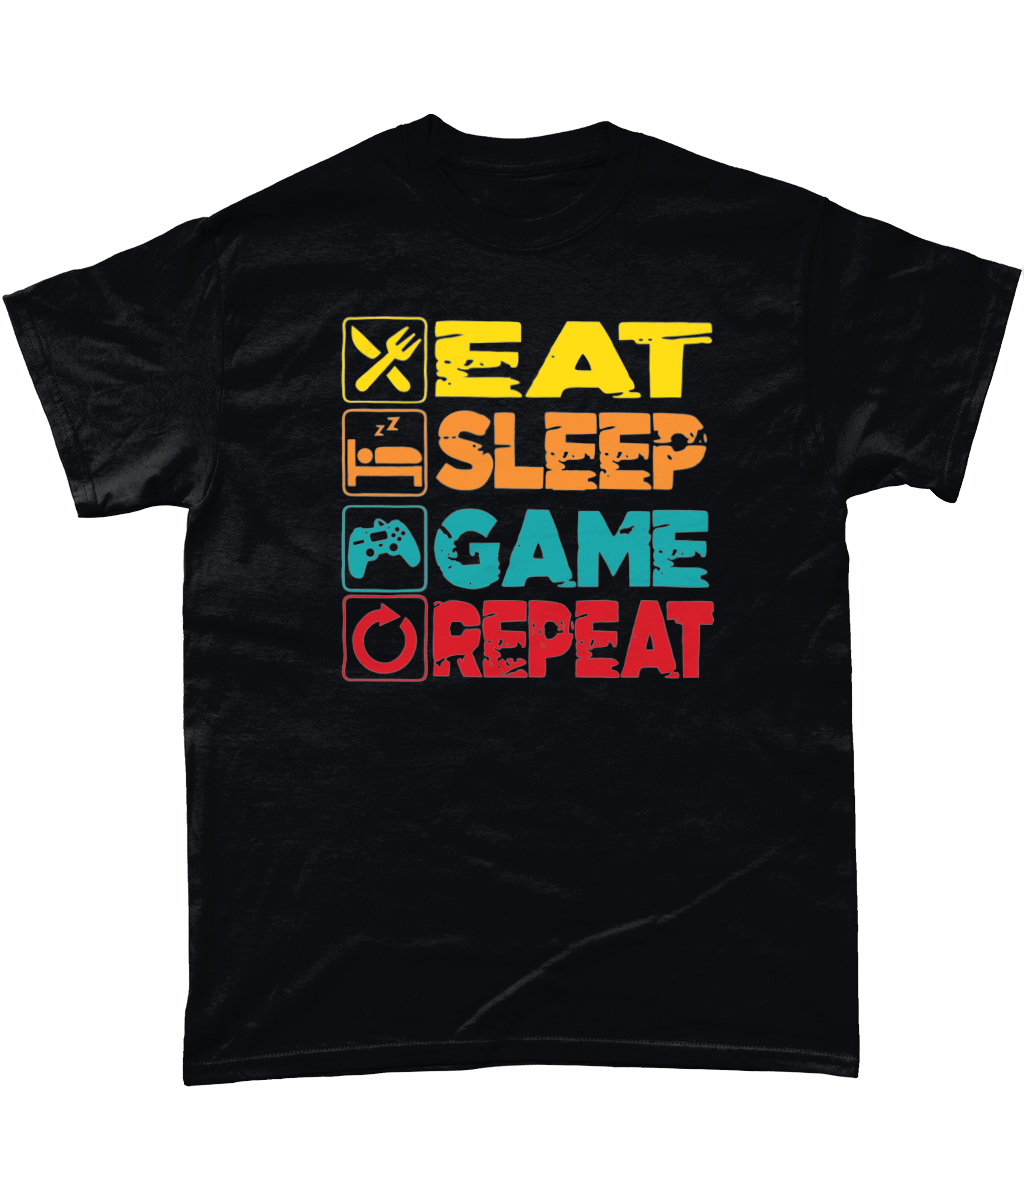 Eat, Sleep, Game, Repeat: Unisex Tee